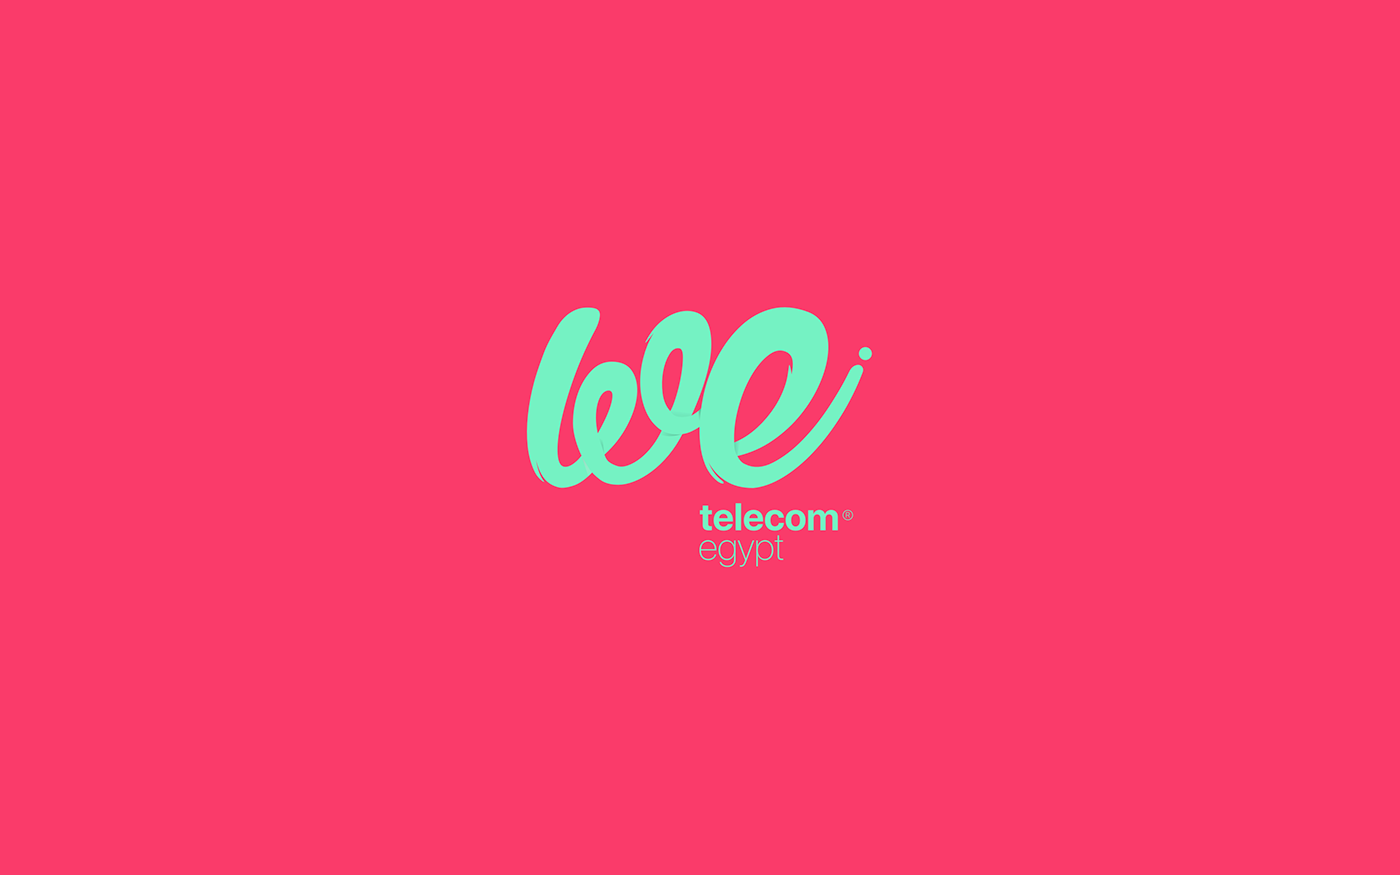 branding  Telecom egypt logo mobile phone colorful